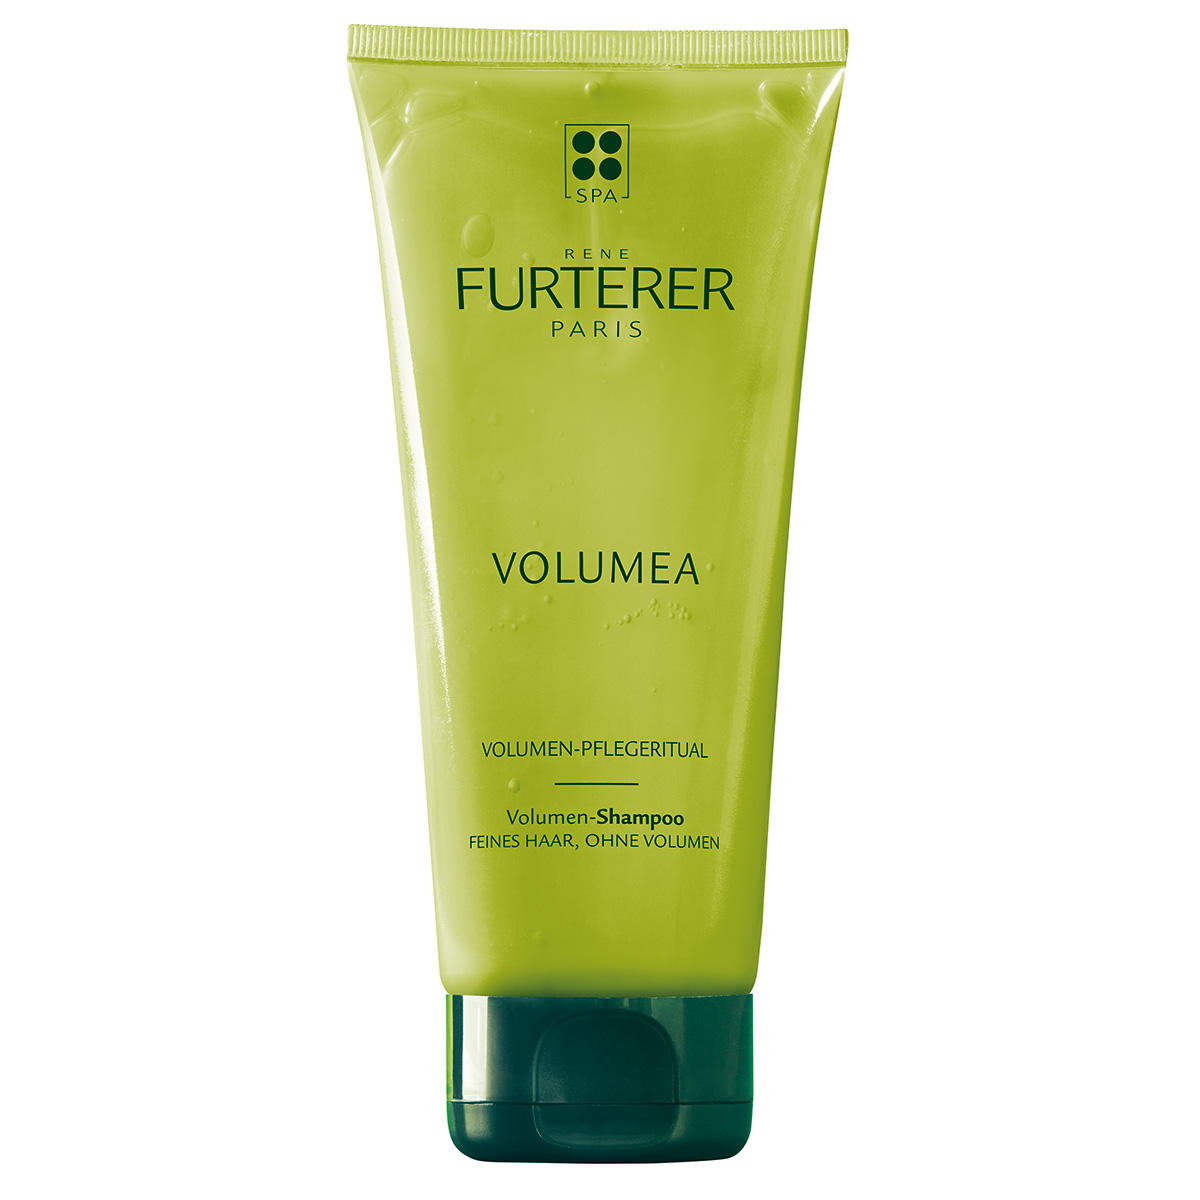 René Furterer Volumea Volume shampoo 200 ml - 1